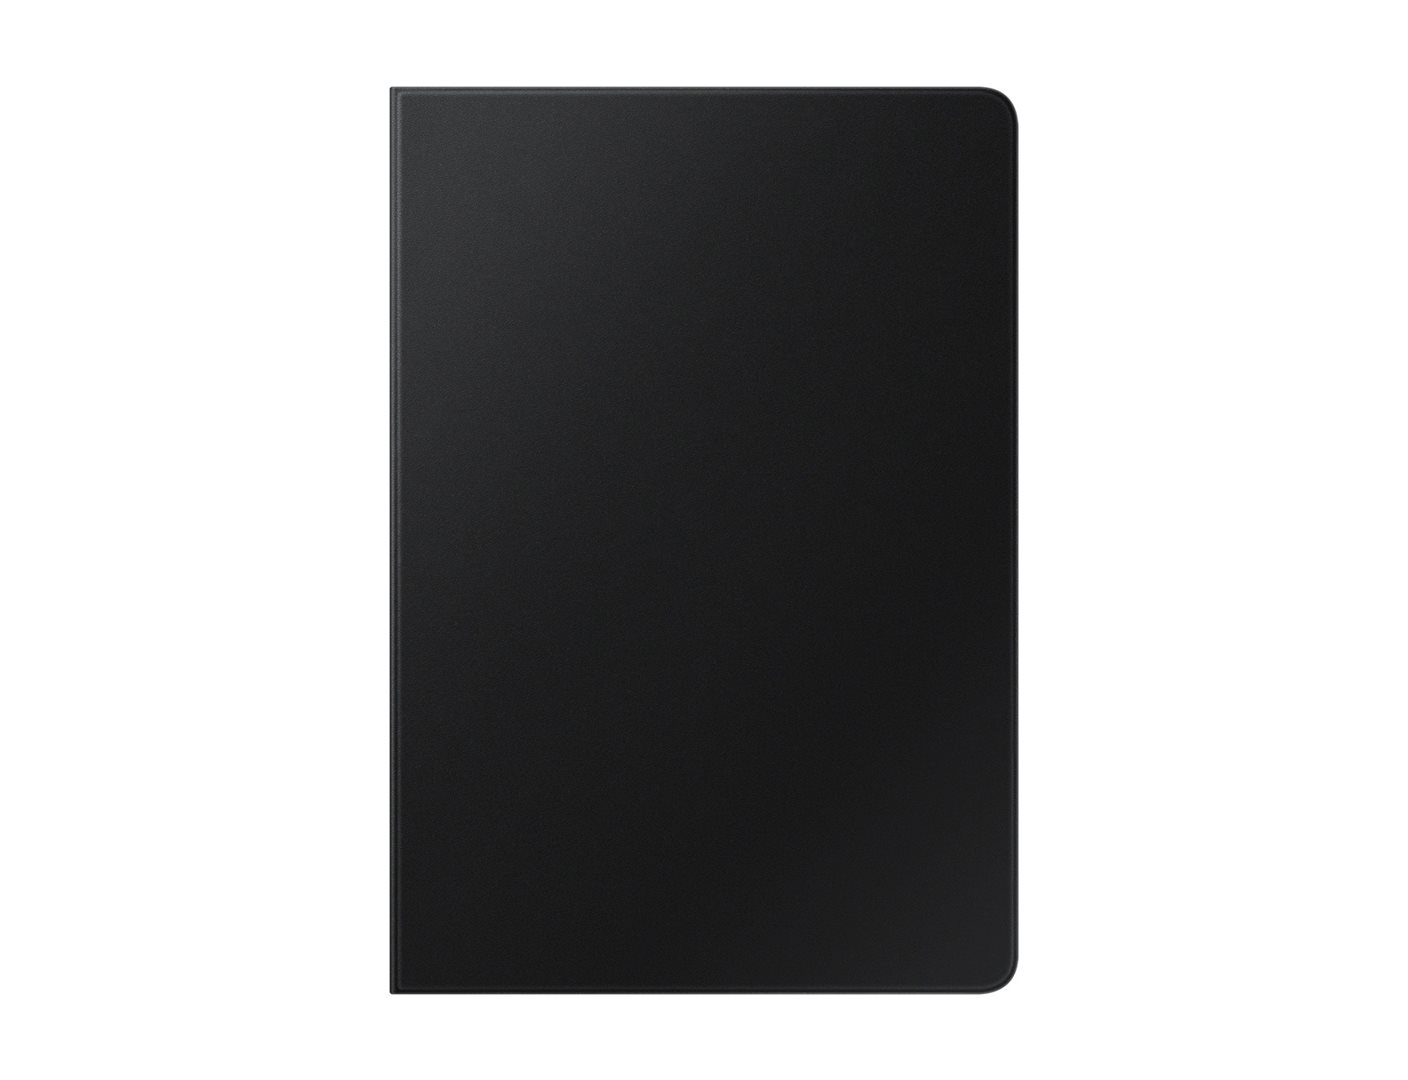 Samsung flipové pouzdro EF-BT870PBE pro Galaxy Tab S7  black